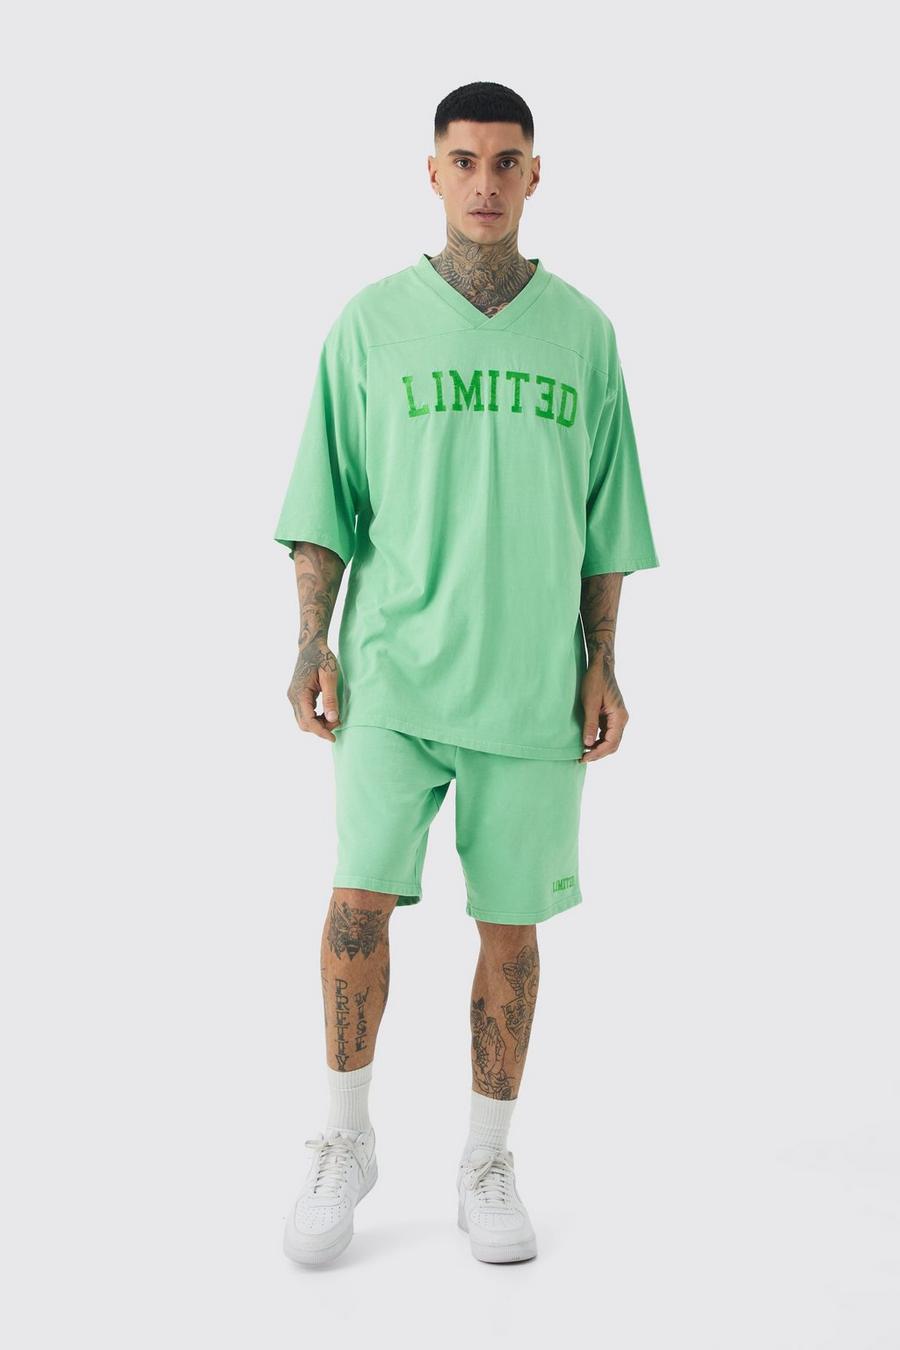 Green Tall Embroidery Limited Football T-shirt & Short Set